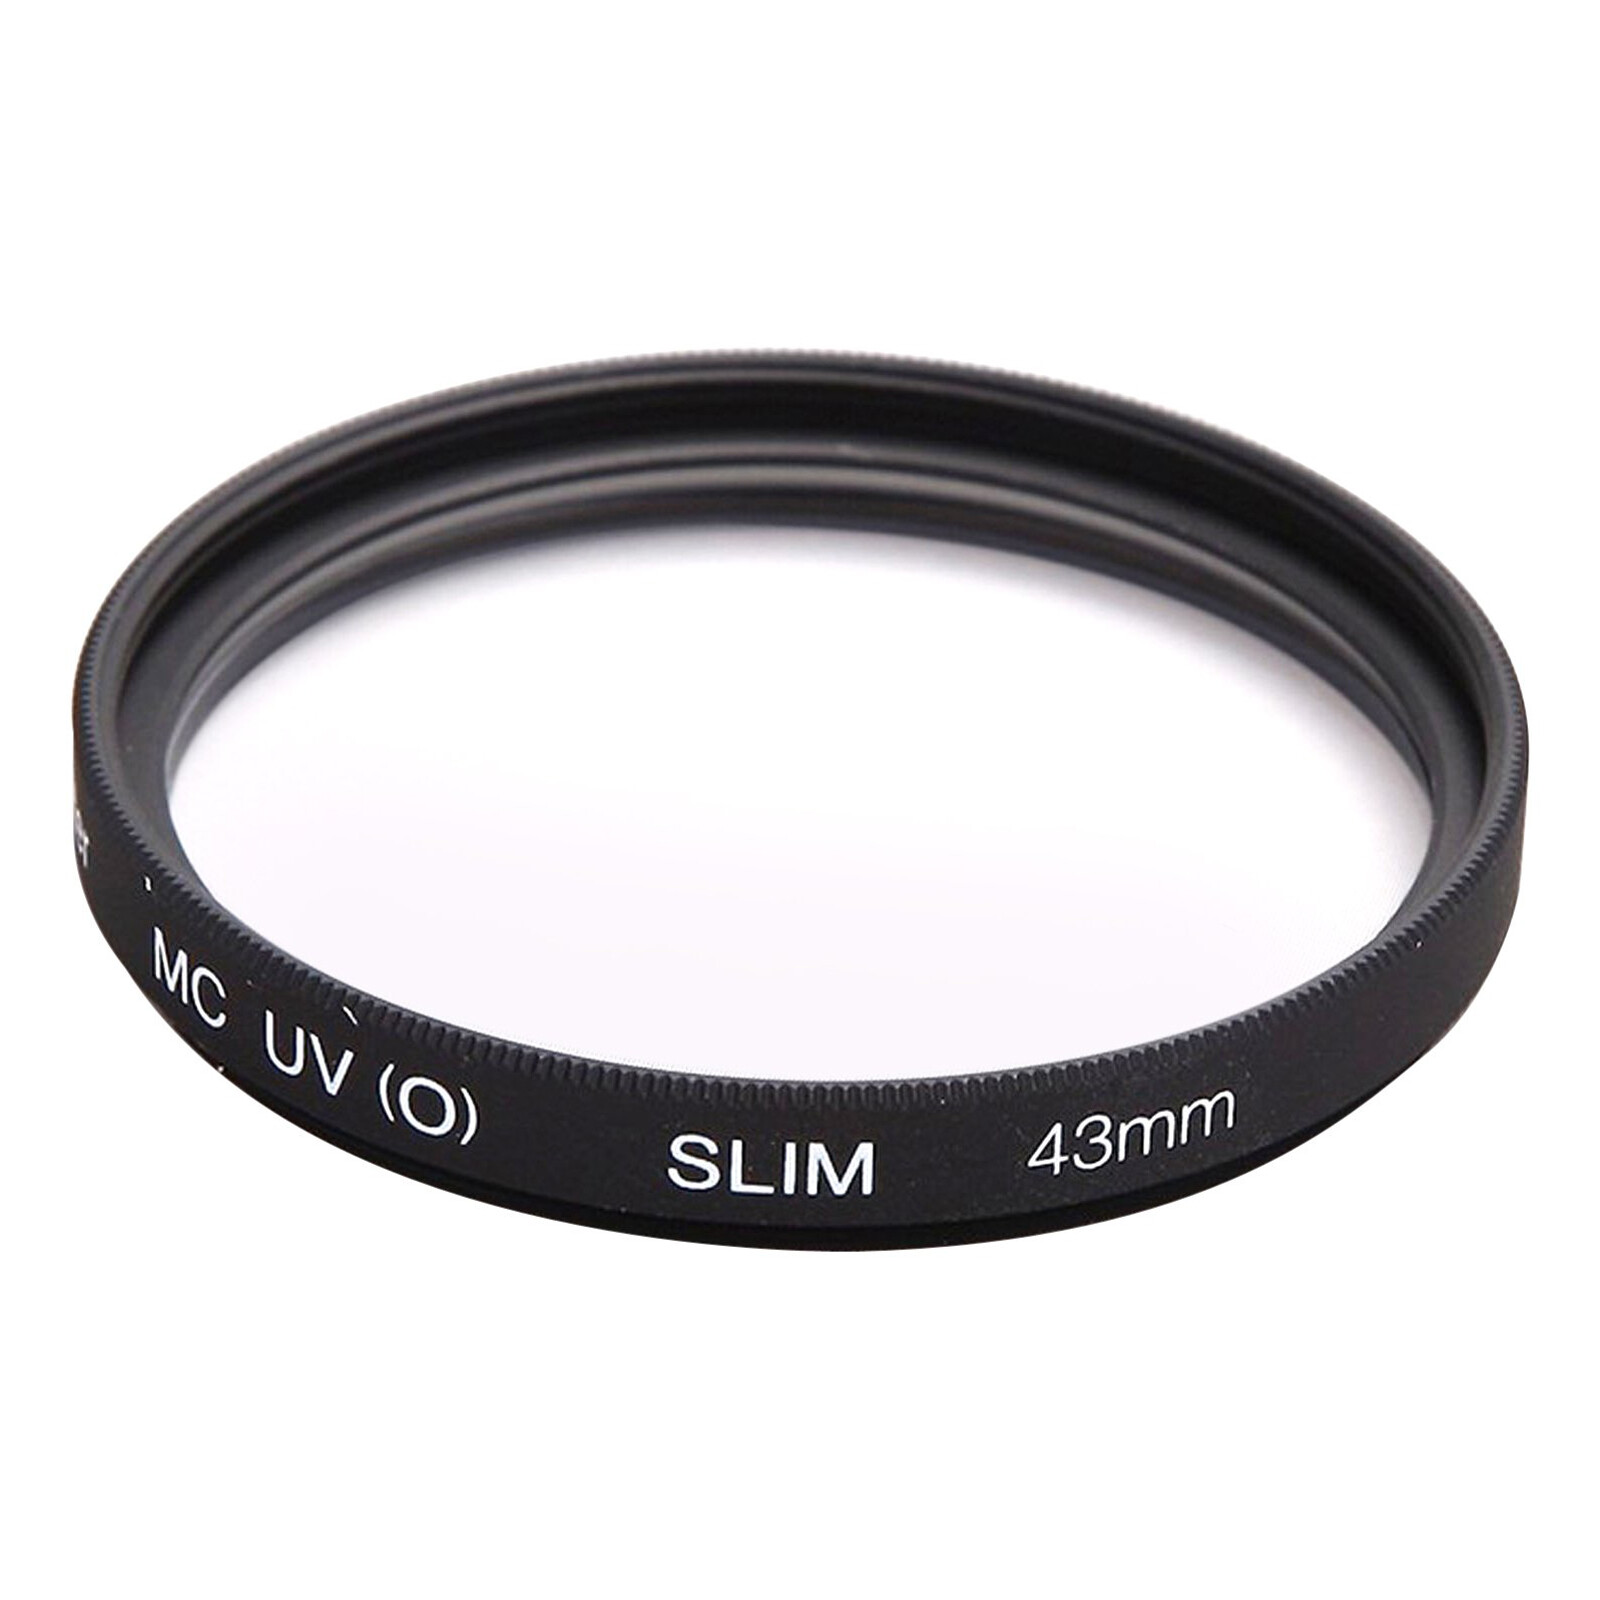 Samyang MF 85/1,4 AS IF UMC Sony A + UV Filter